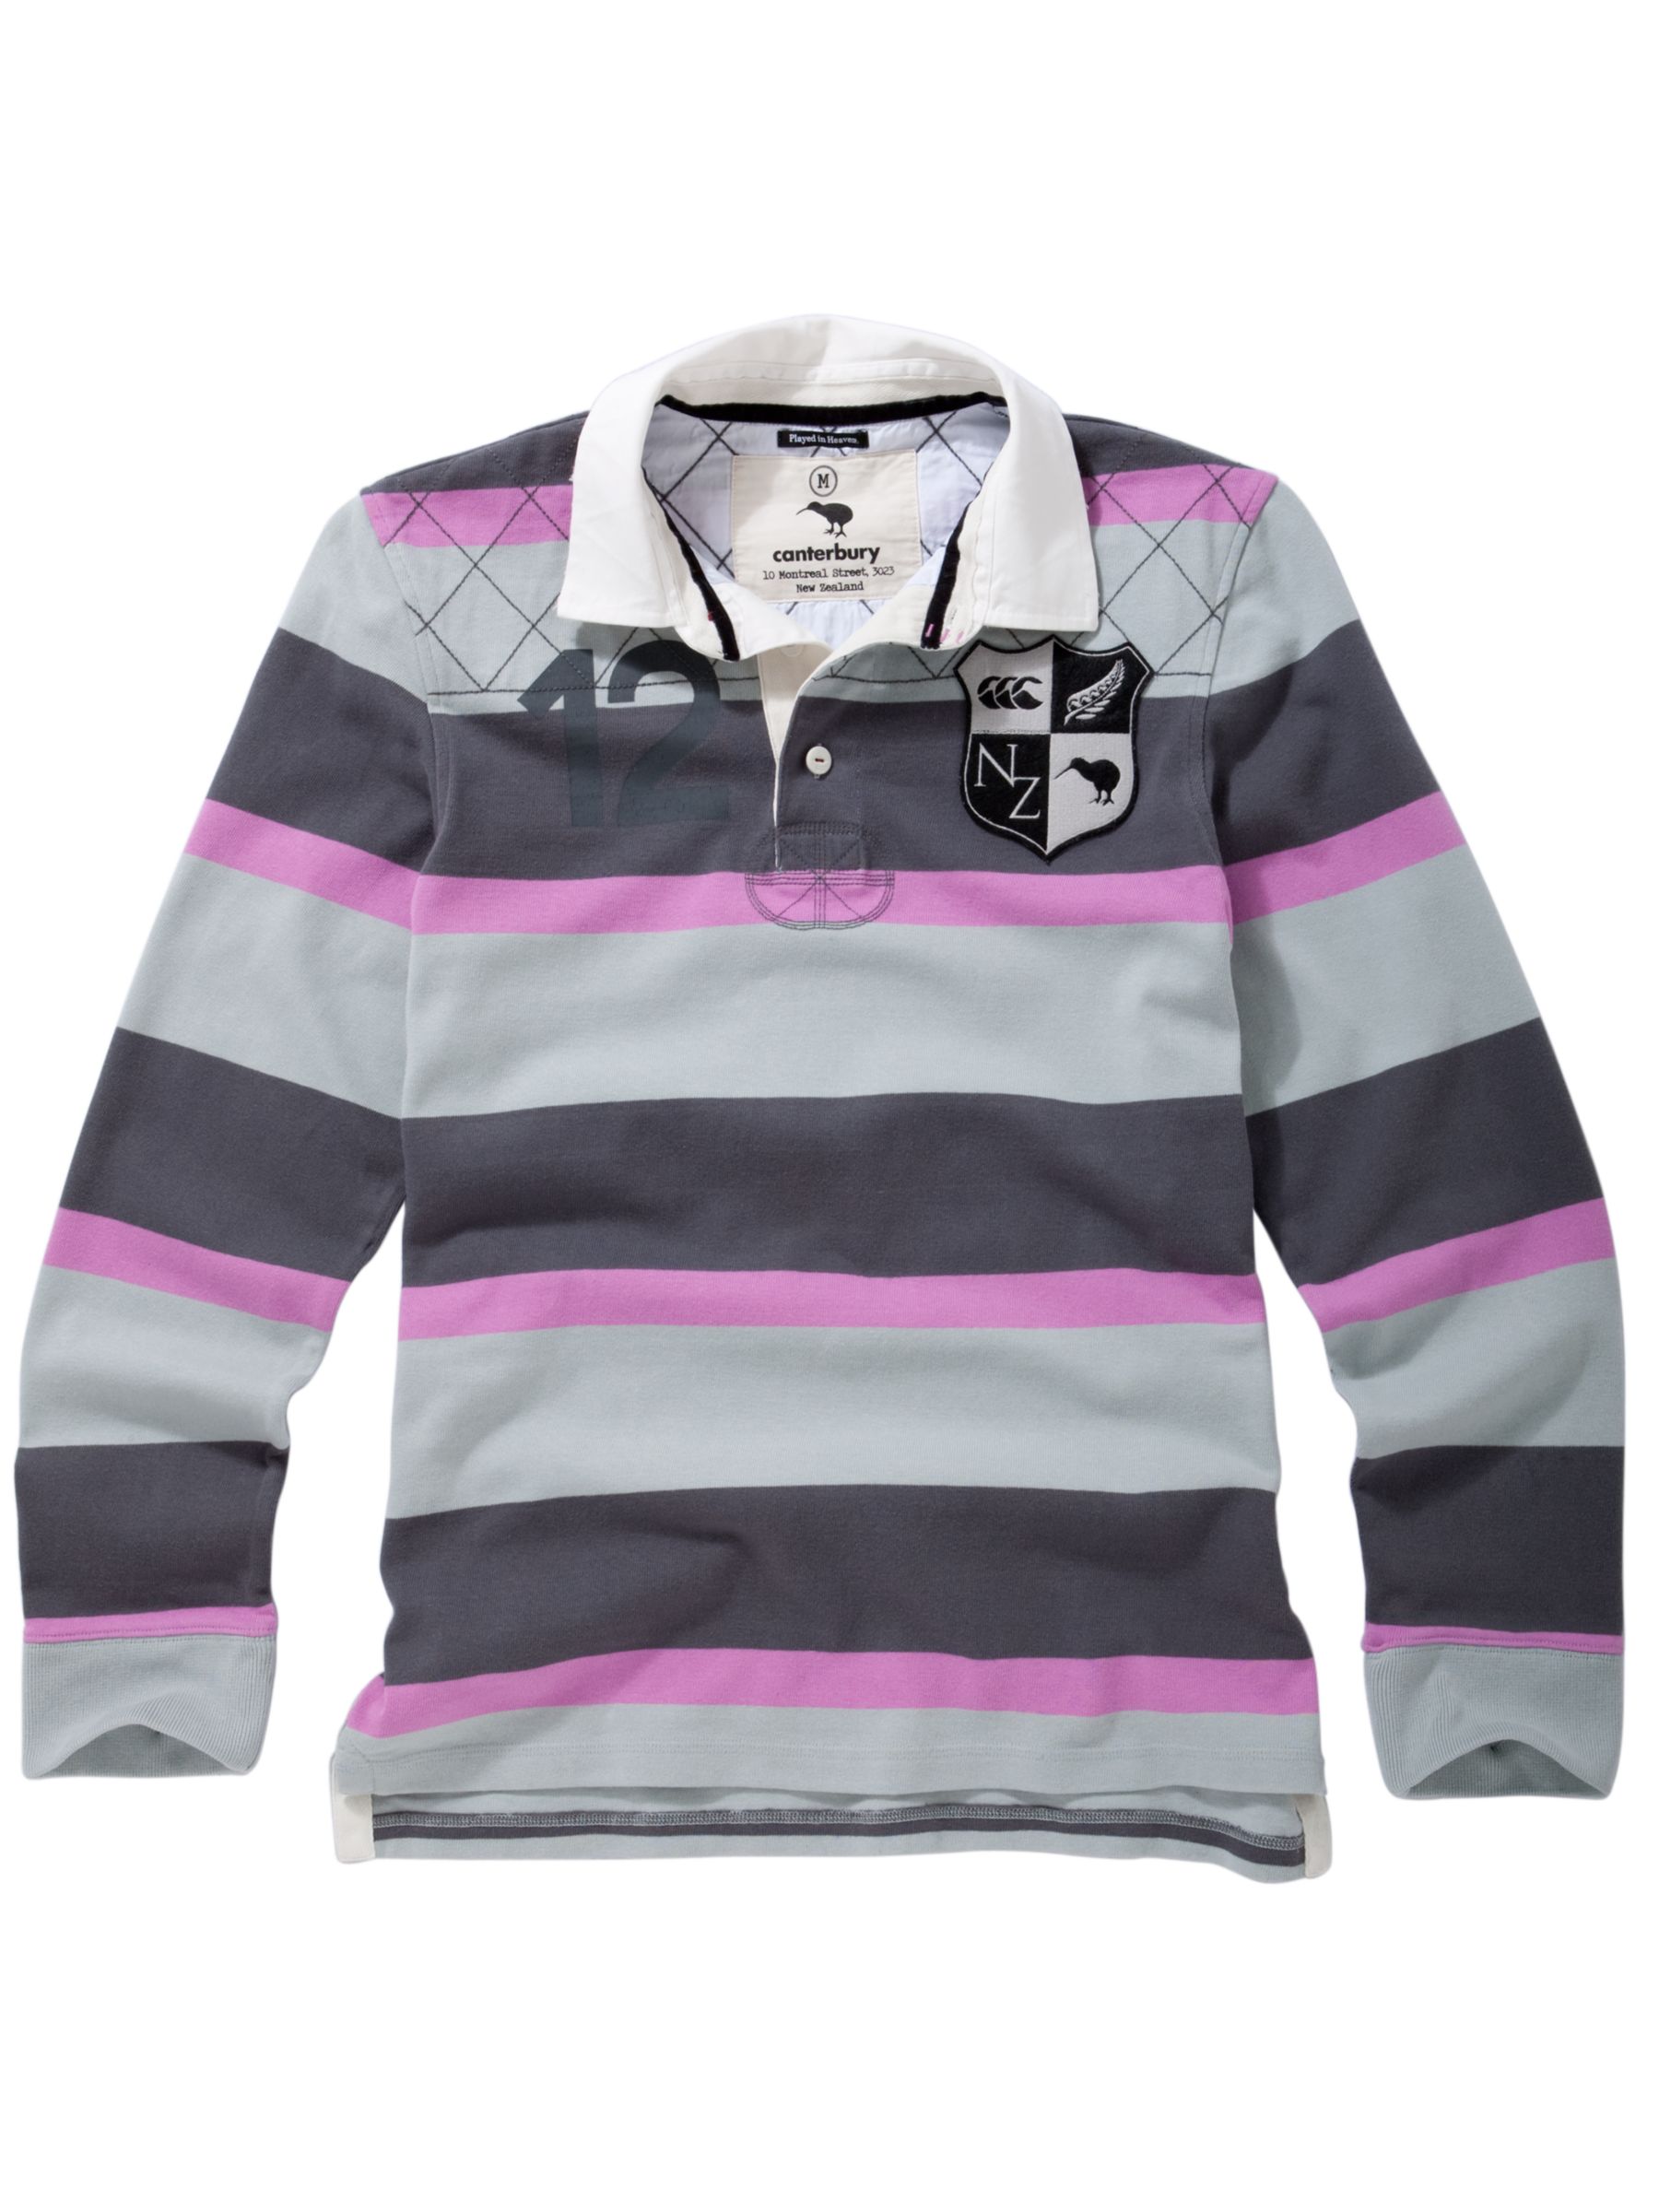 Williams Stripe Rugby Shirt, Gunmetal